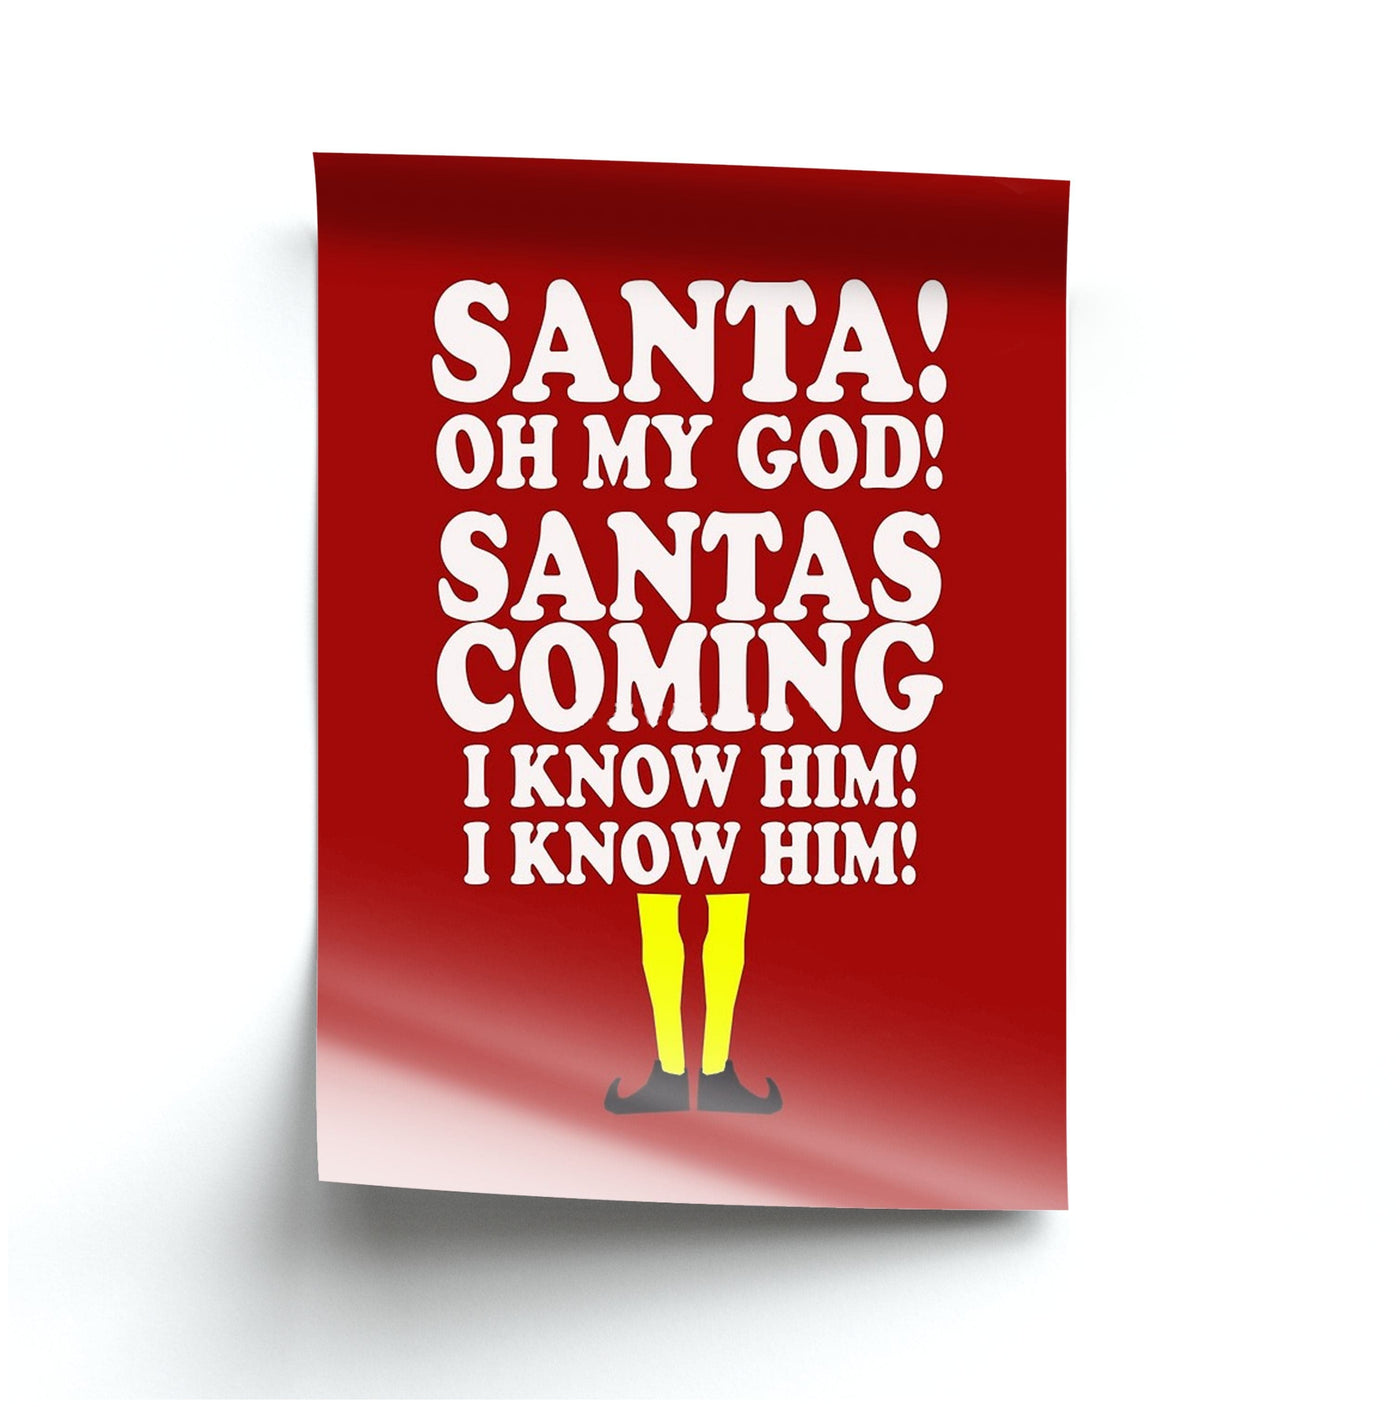 Santa's Coming - Buddy The Elf Poster